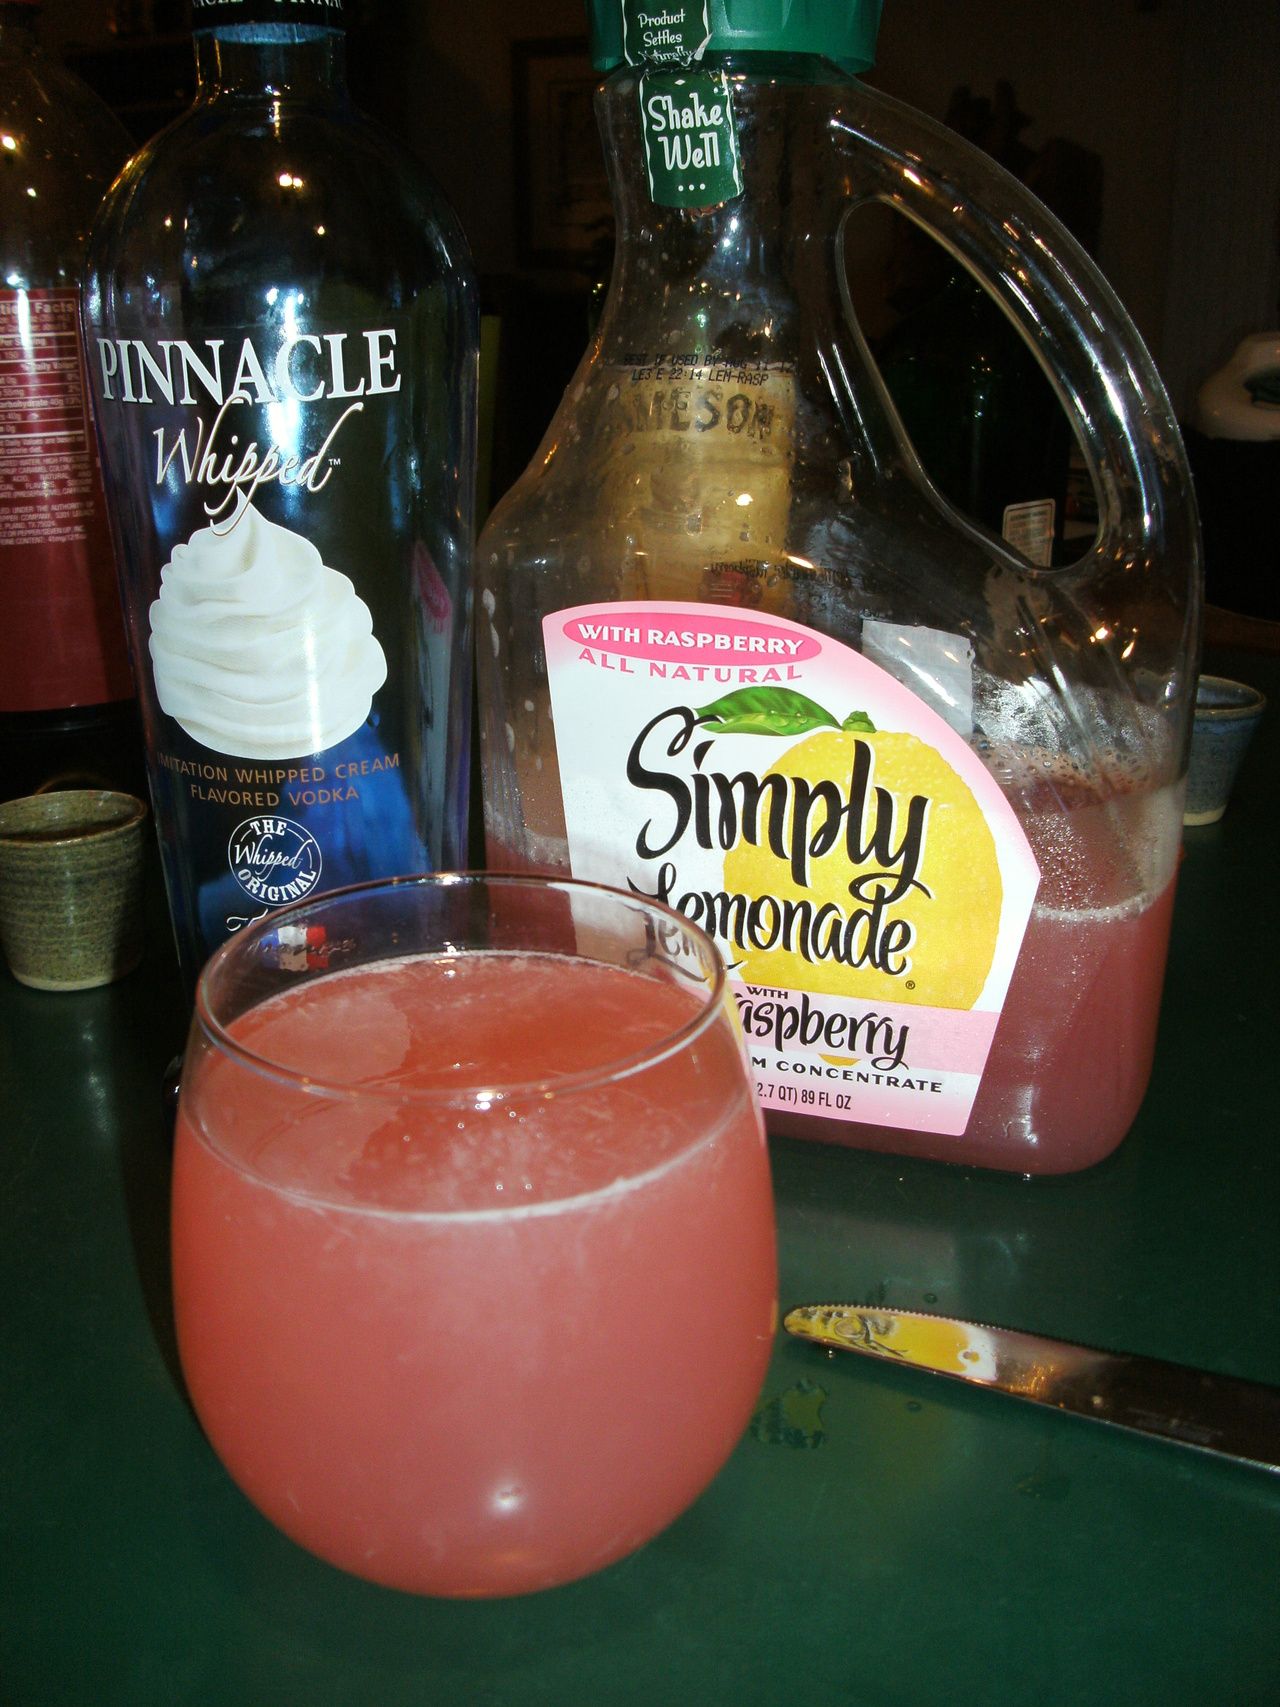 Pinnacle Whipped Vodka &  Simply Lemonade with Raspberry.